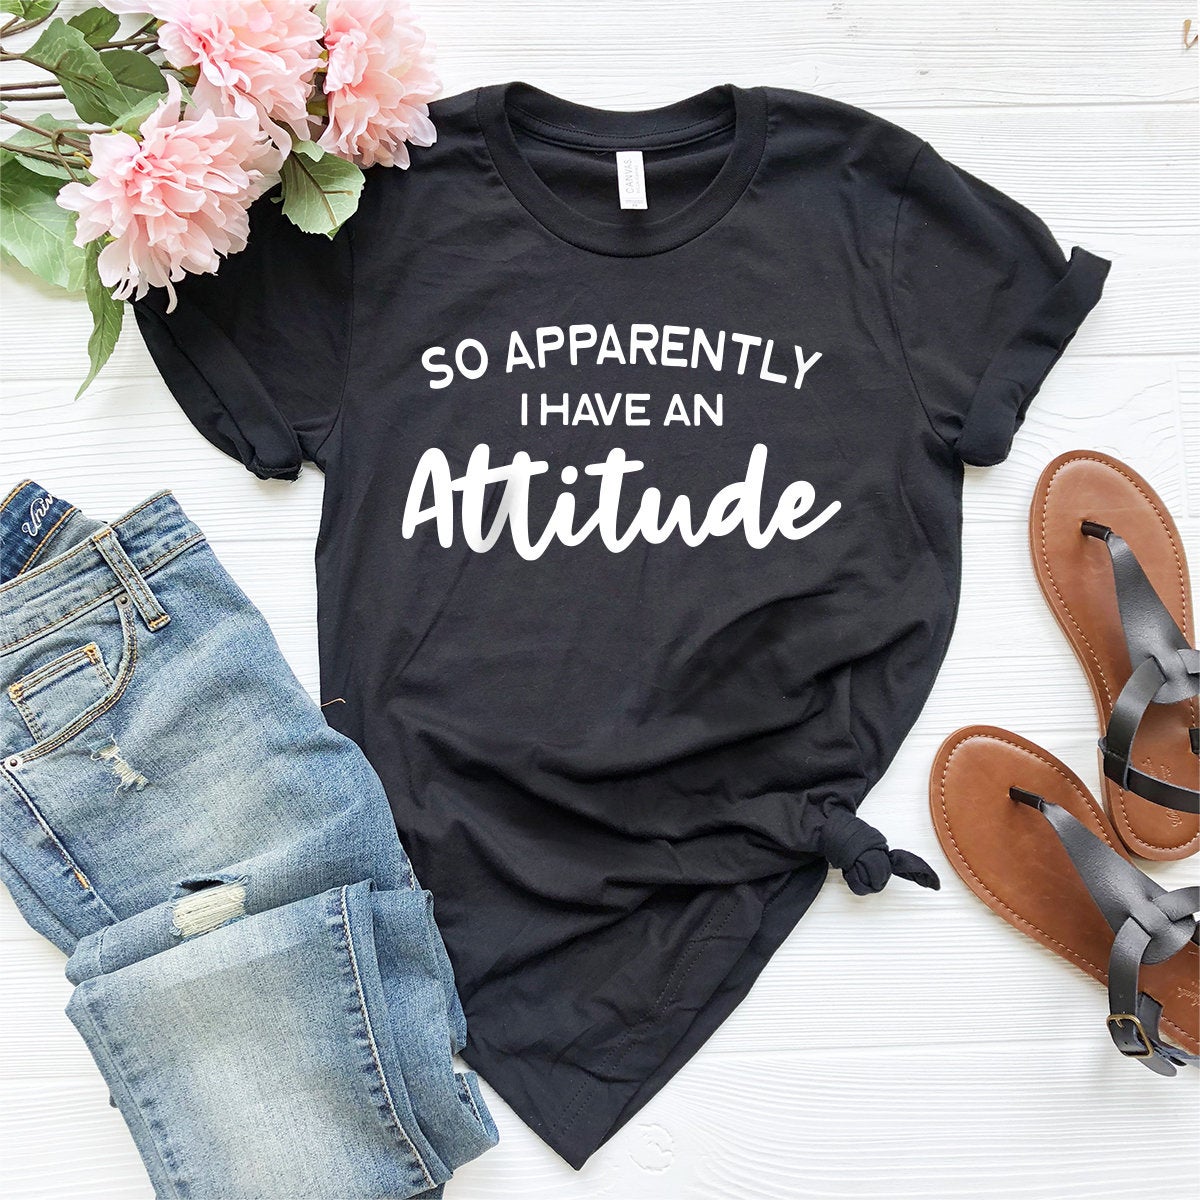 Funny Women Shirt, Sarcastic Shirt, Sassy T-Shirt, Funny Shirts For Women, Funny Quotes Shirt, So Apparently I Have An Attitude Shirt - Fastdeliverytees.com